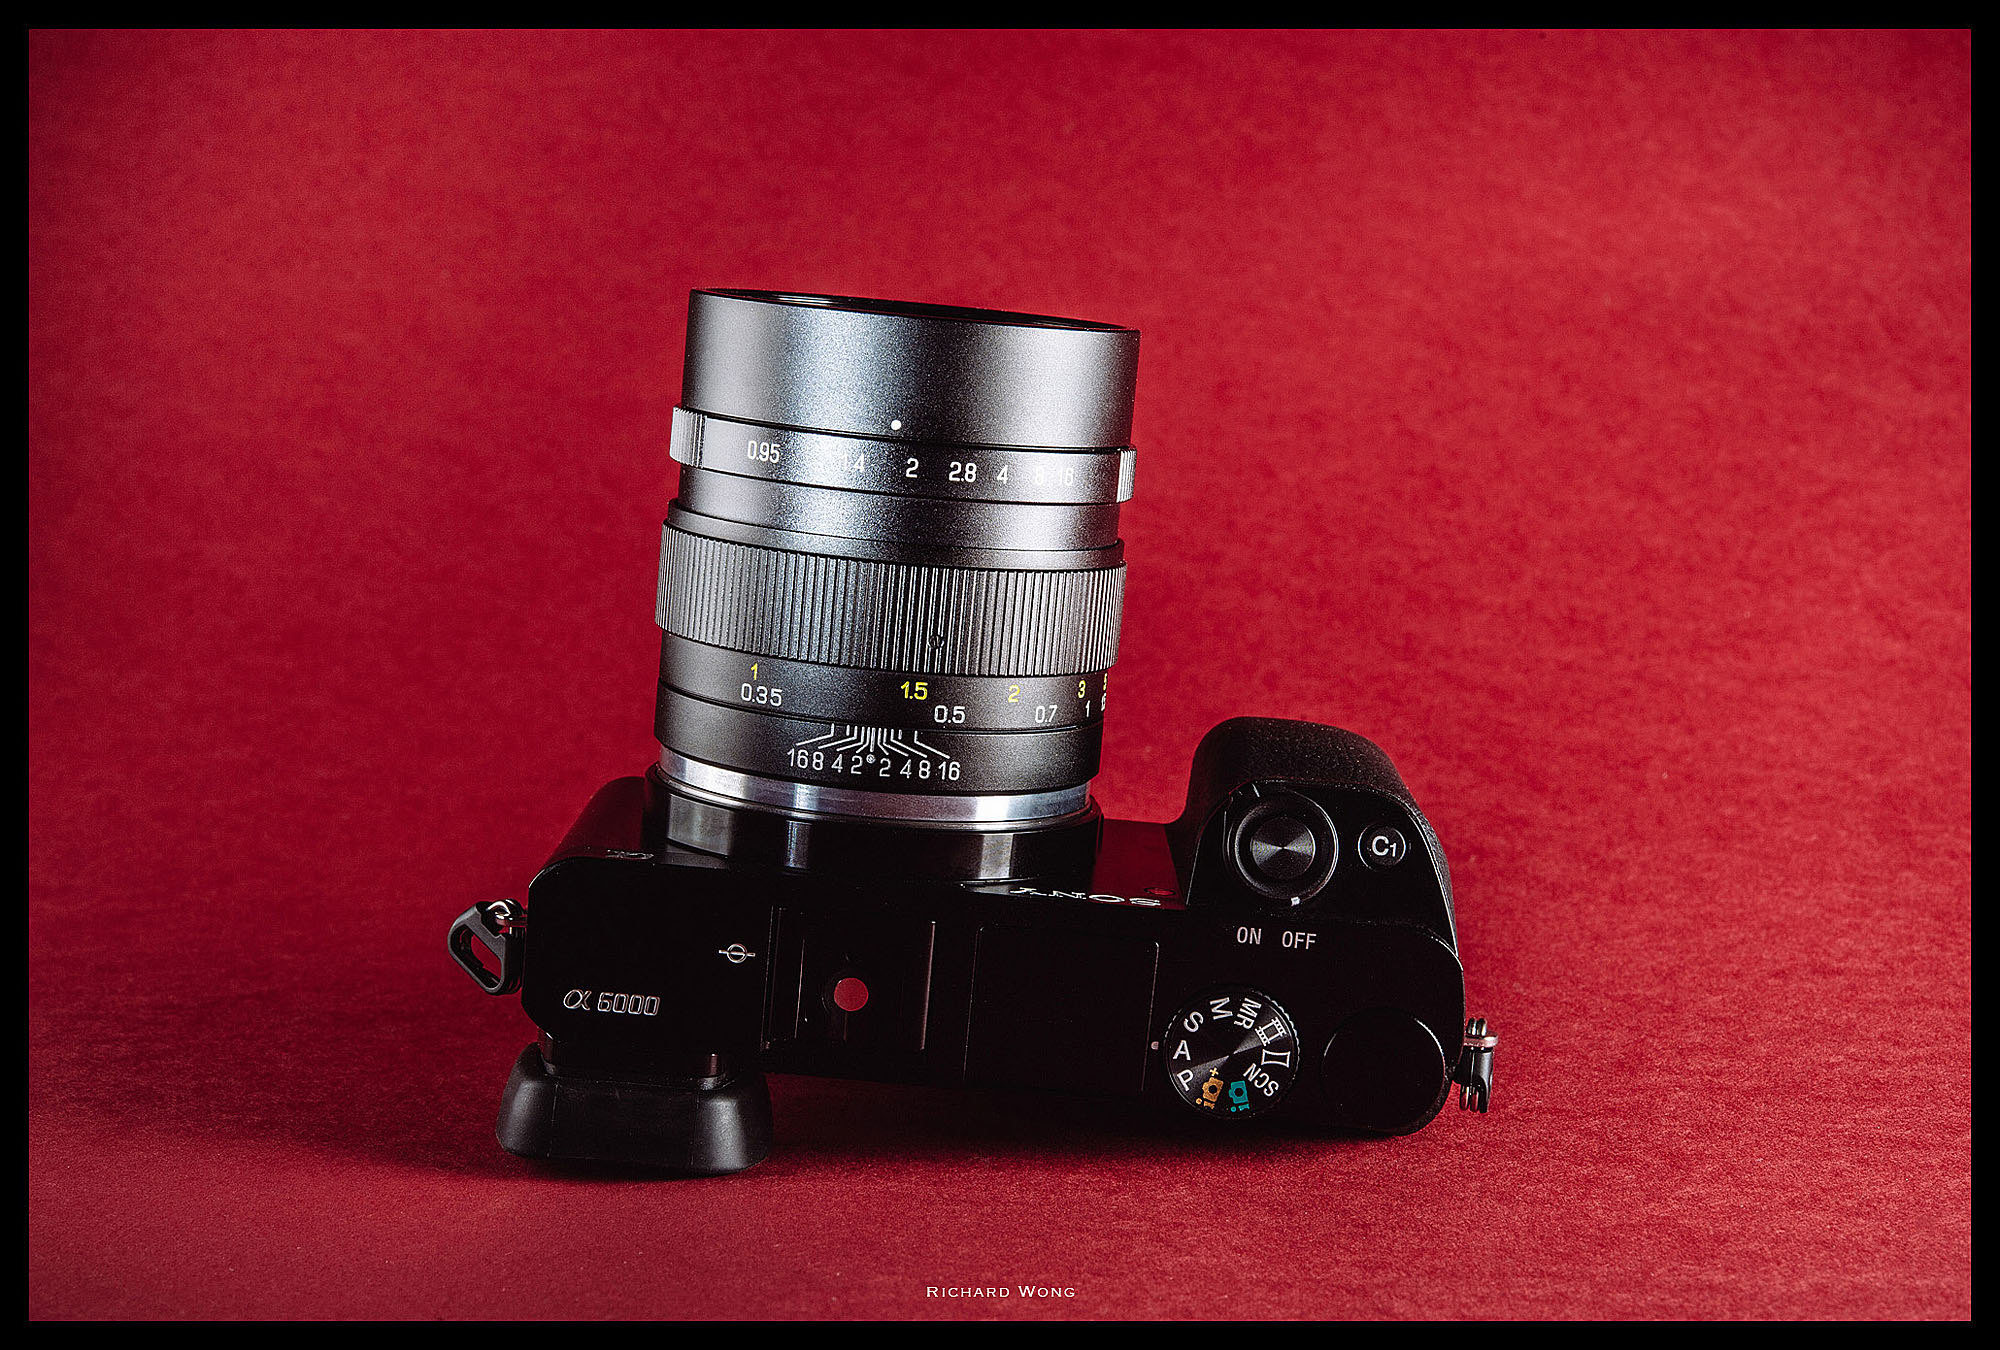 Gedrag Lionel Green Street Zes ZY Optics Mitakon Speedmaster 35mm f/0.95 Mark II Review – Review By Richard